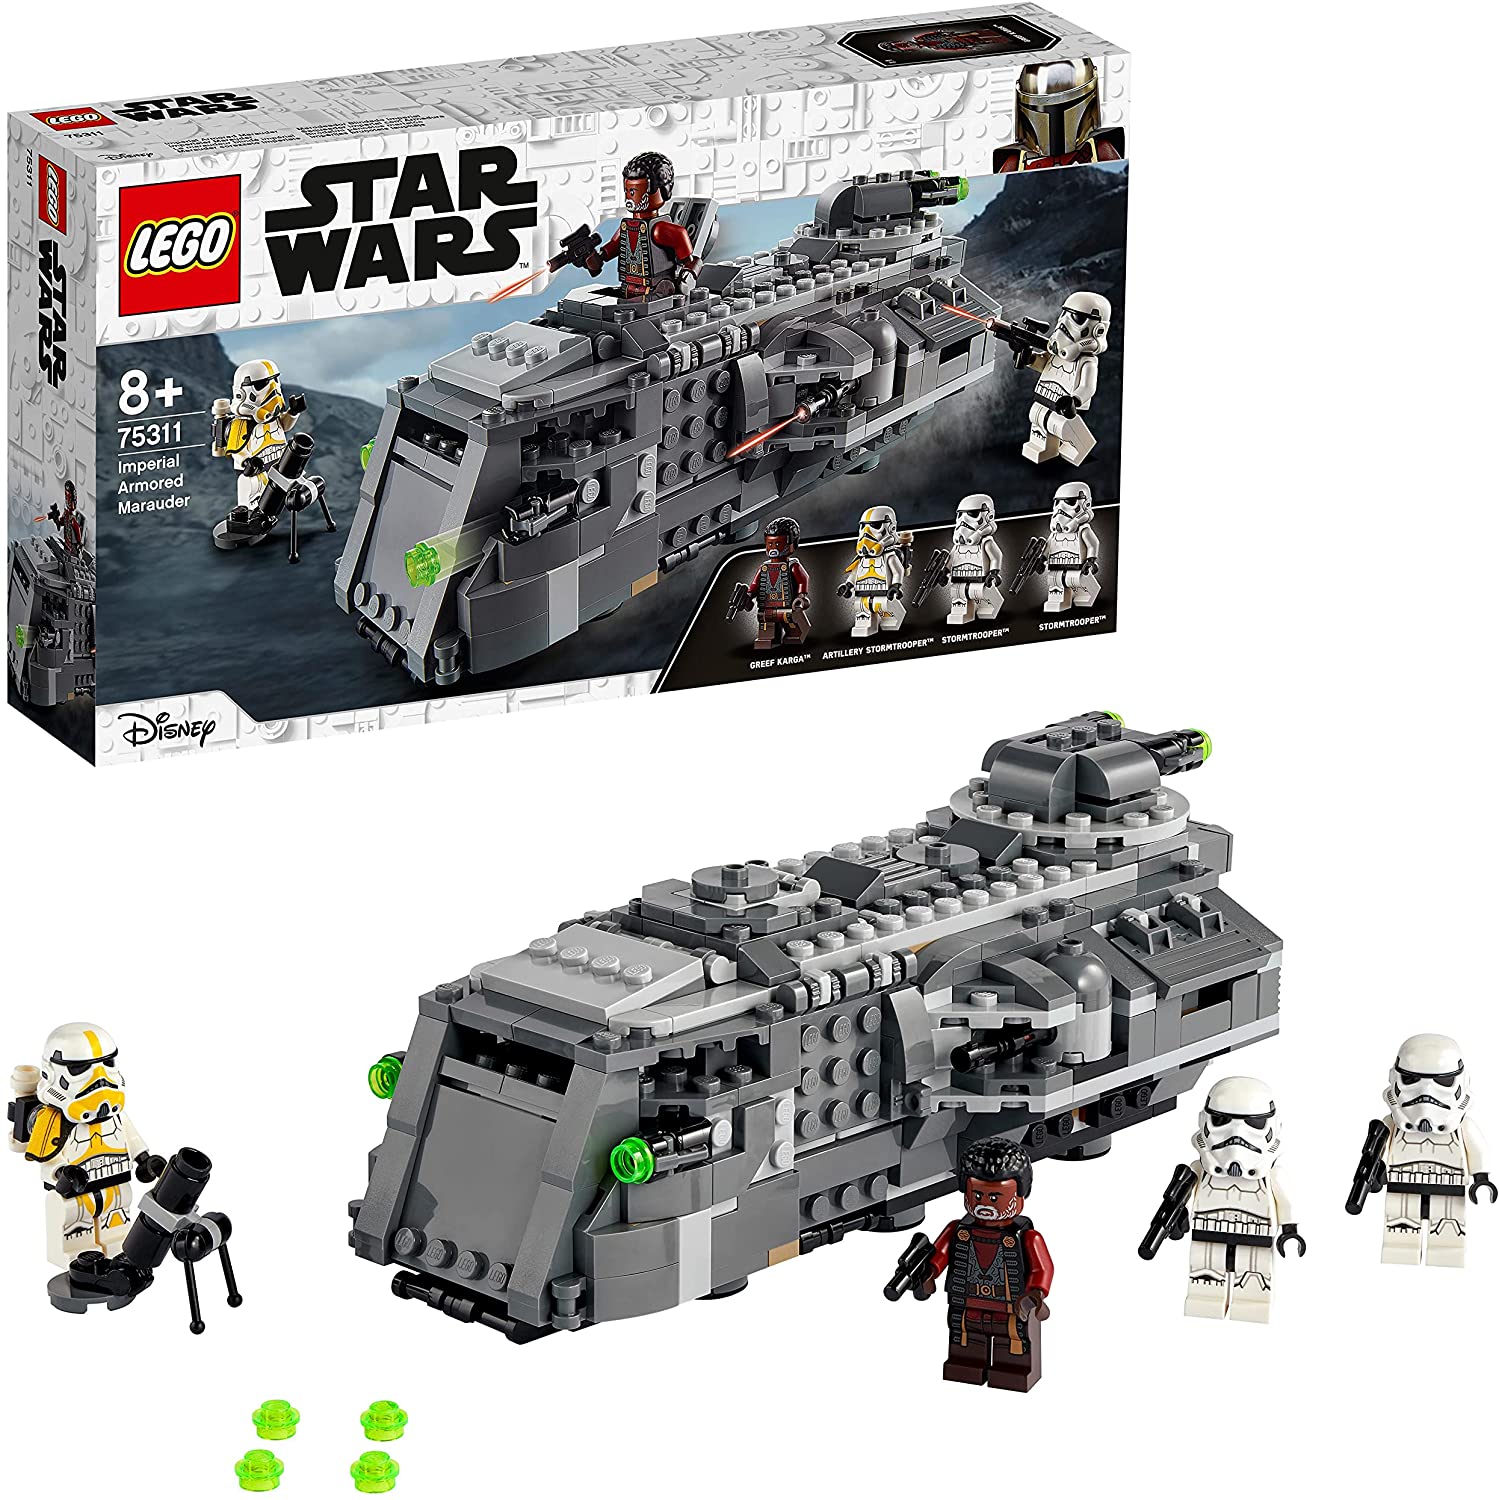 LEGO 75311 Star Wars Imperial Marauder, Construction Kit for Children from 